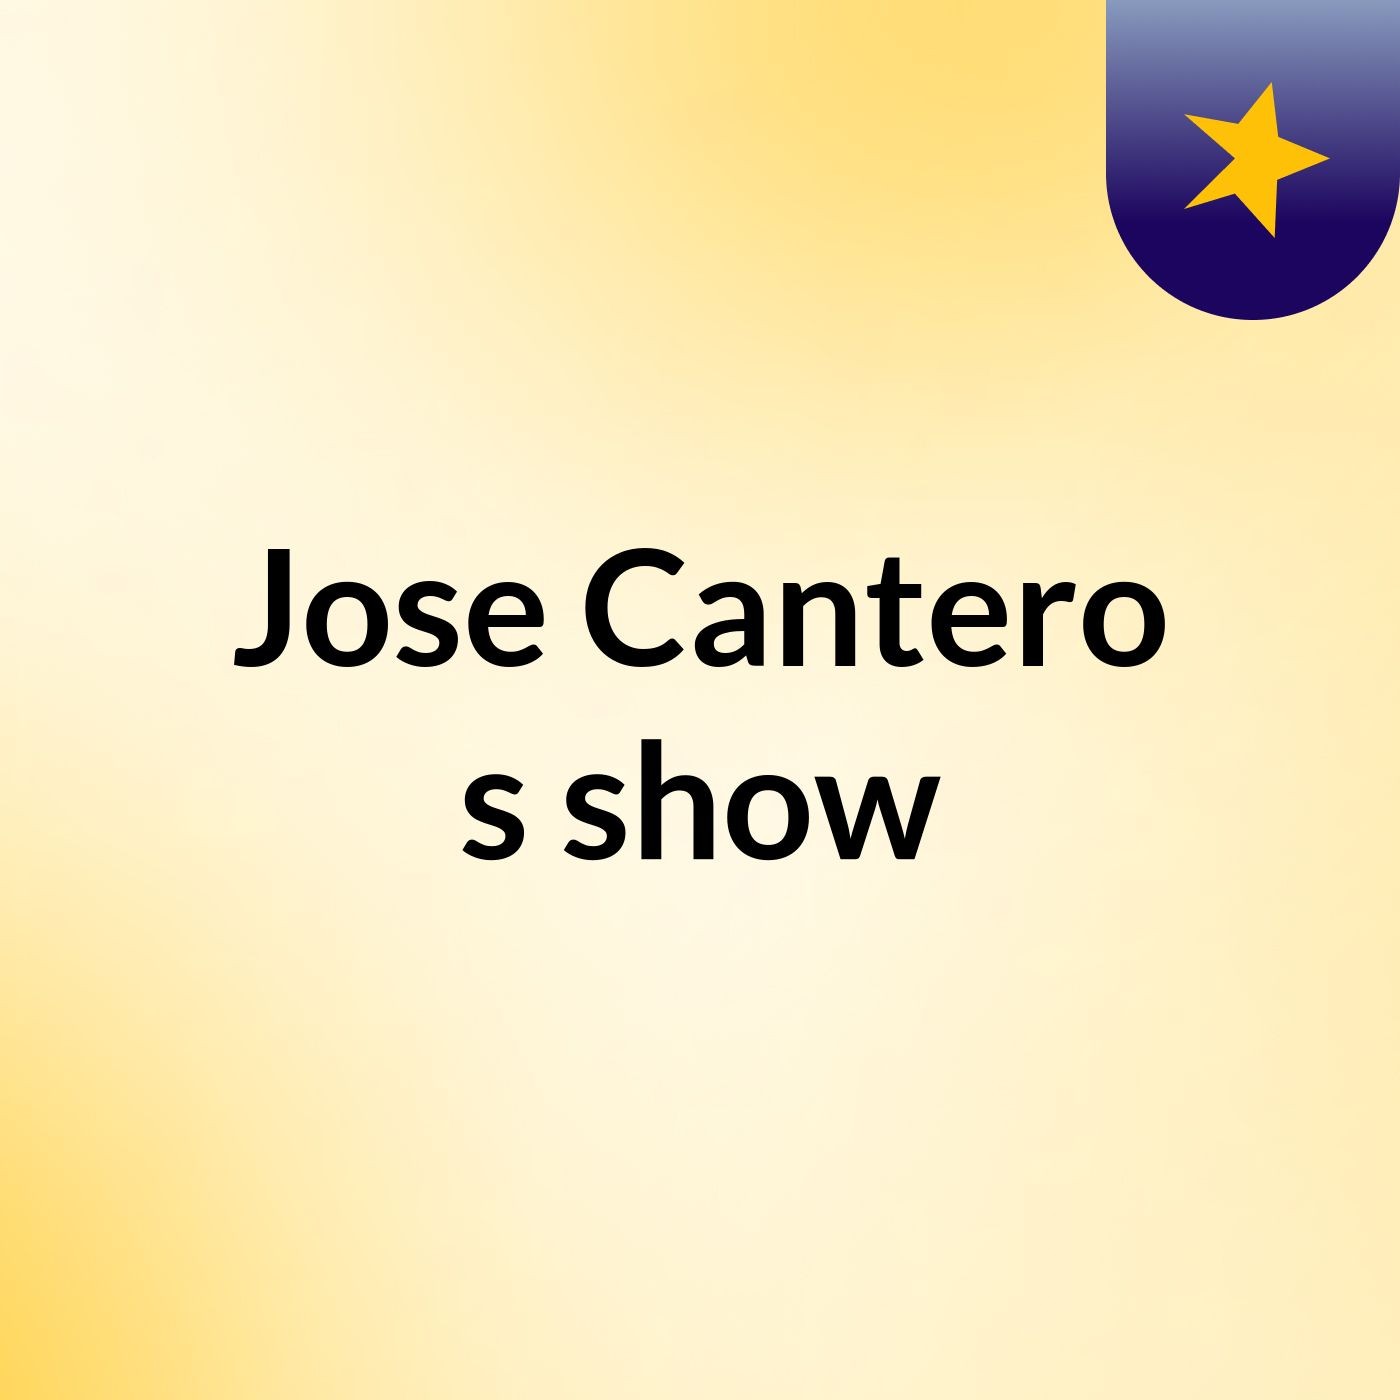 Jose Cantero's show